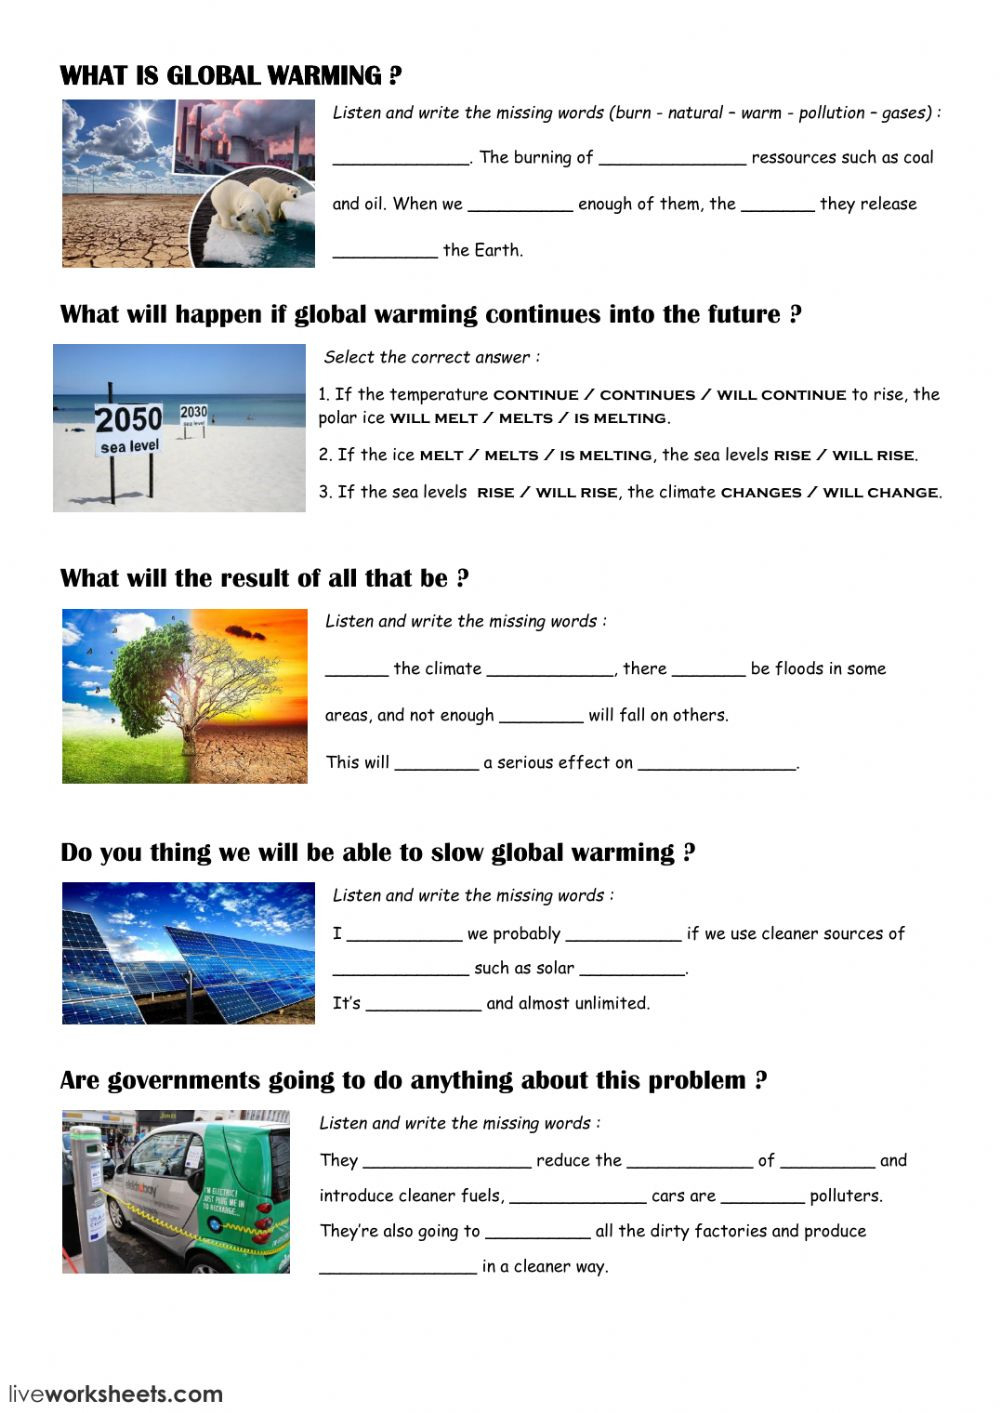 Global Rming Interactive Worksheet